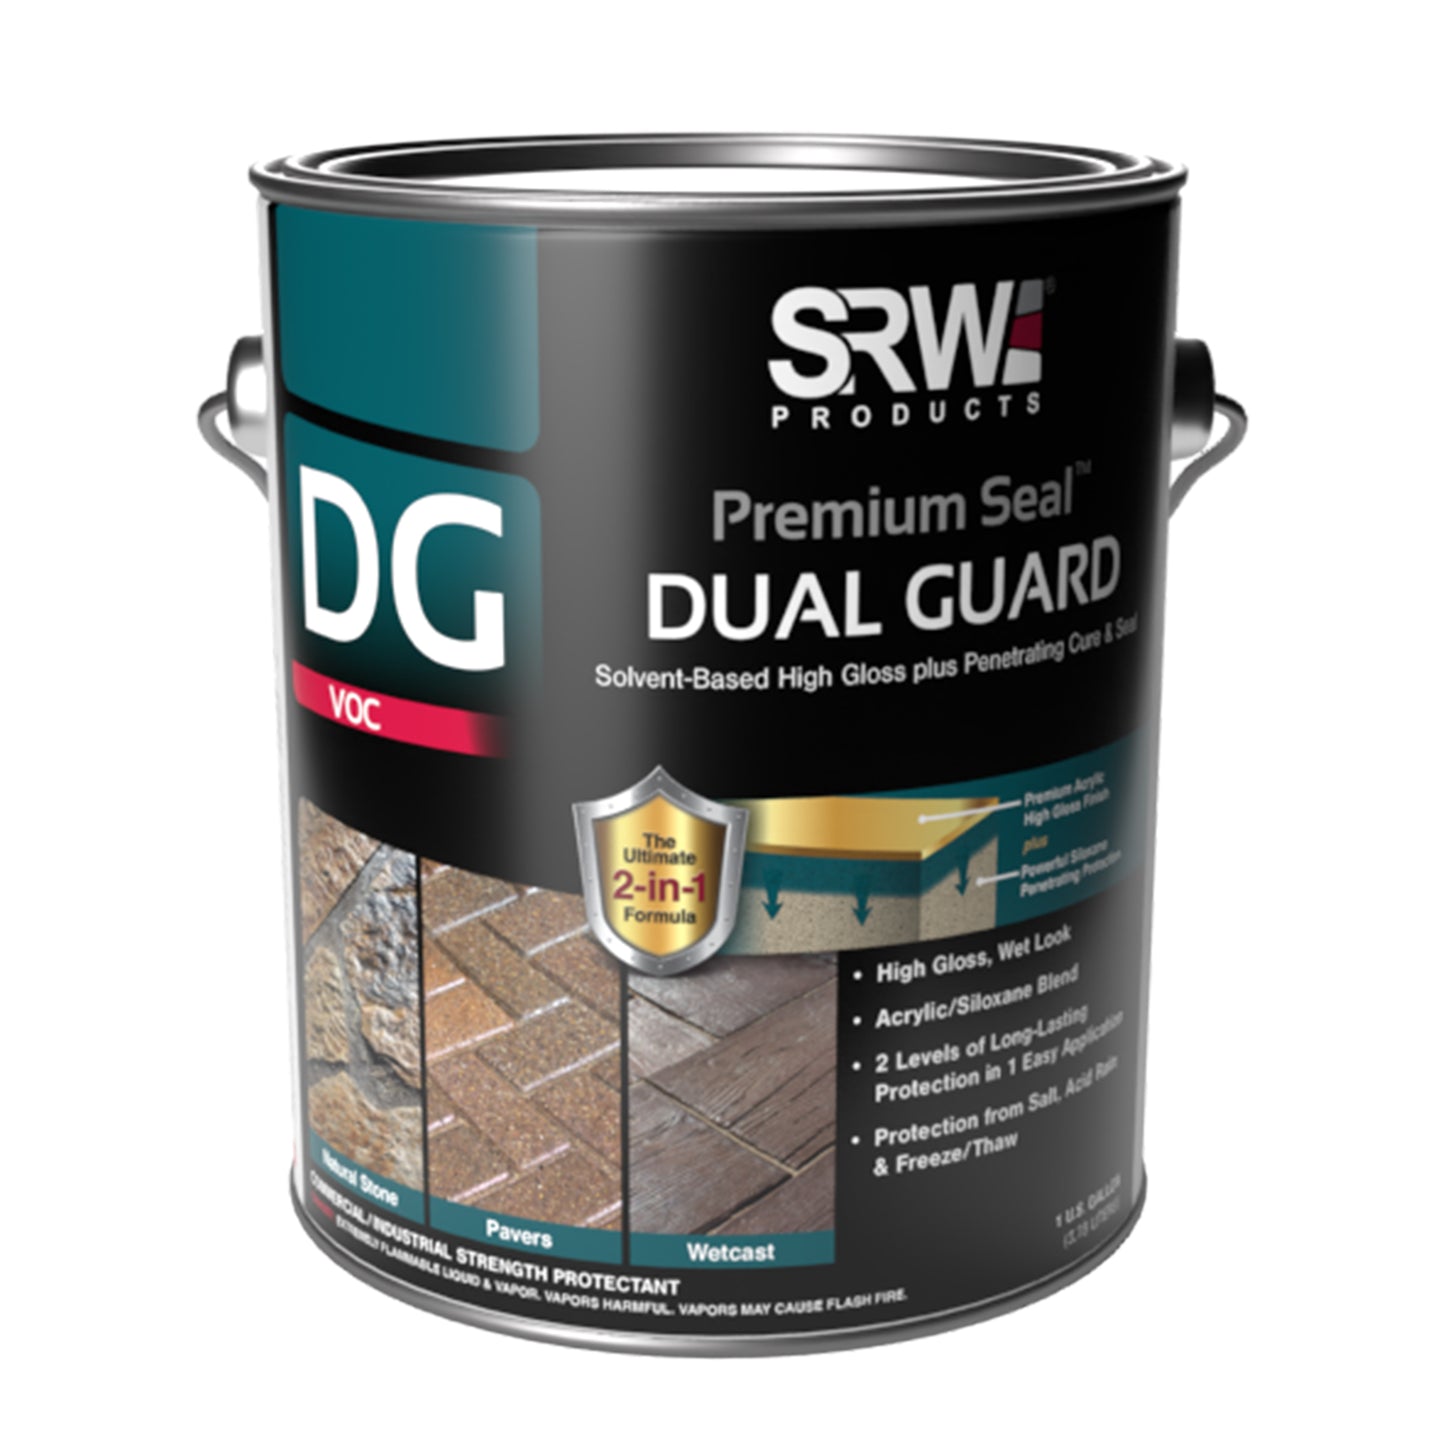 SRW Products DG VOC Dual Guard - Premium Seal™